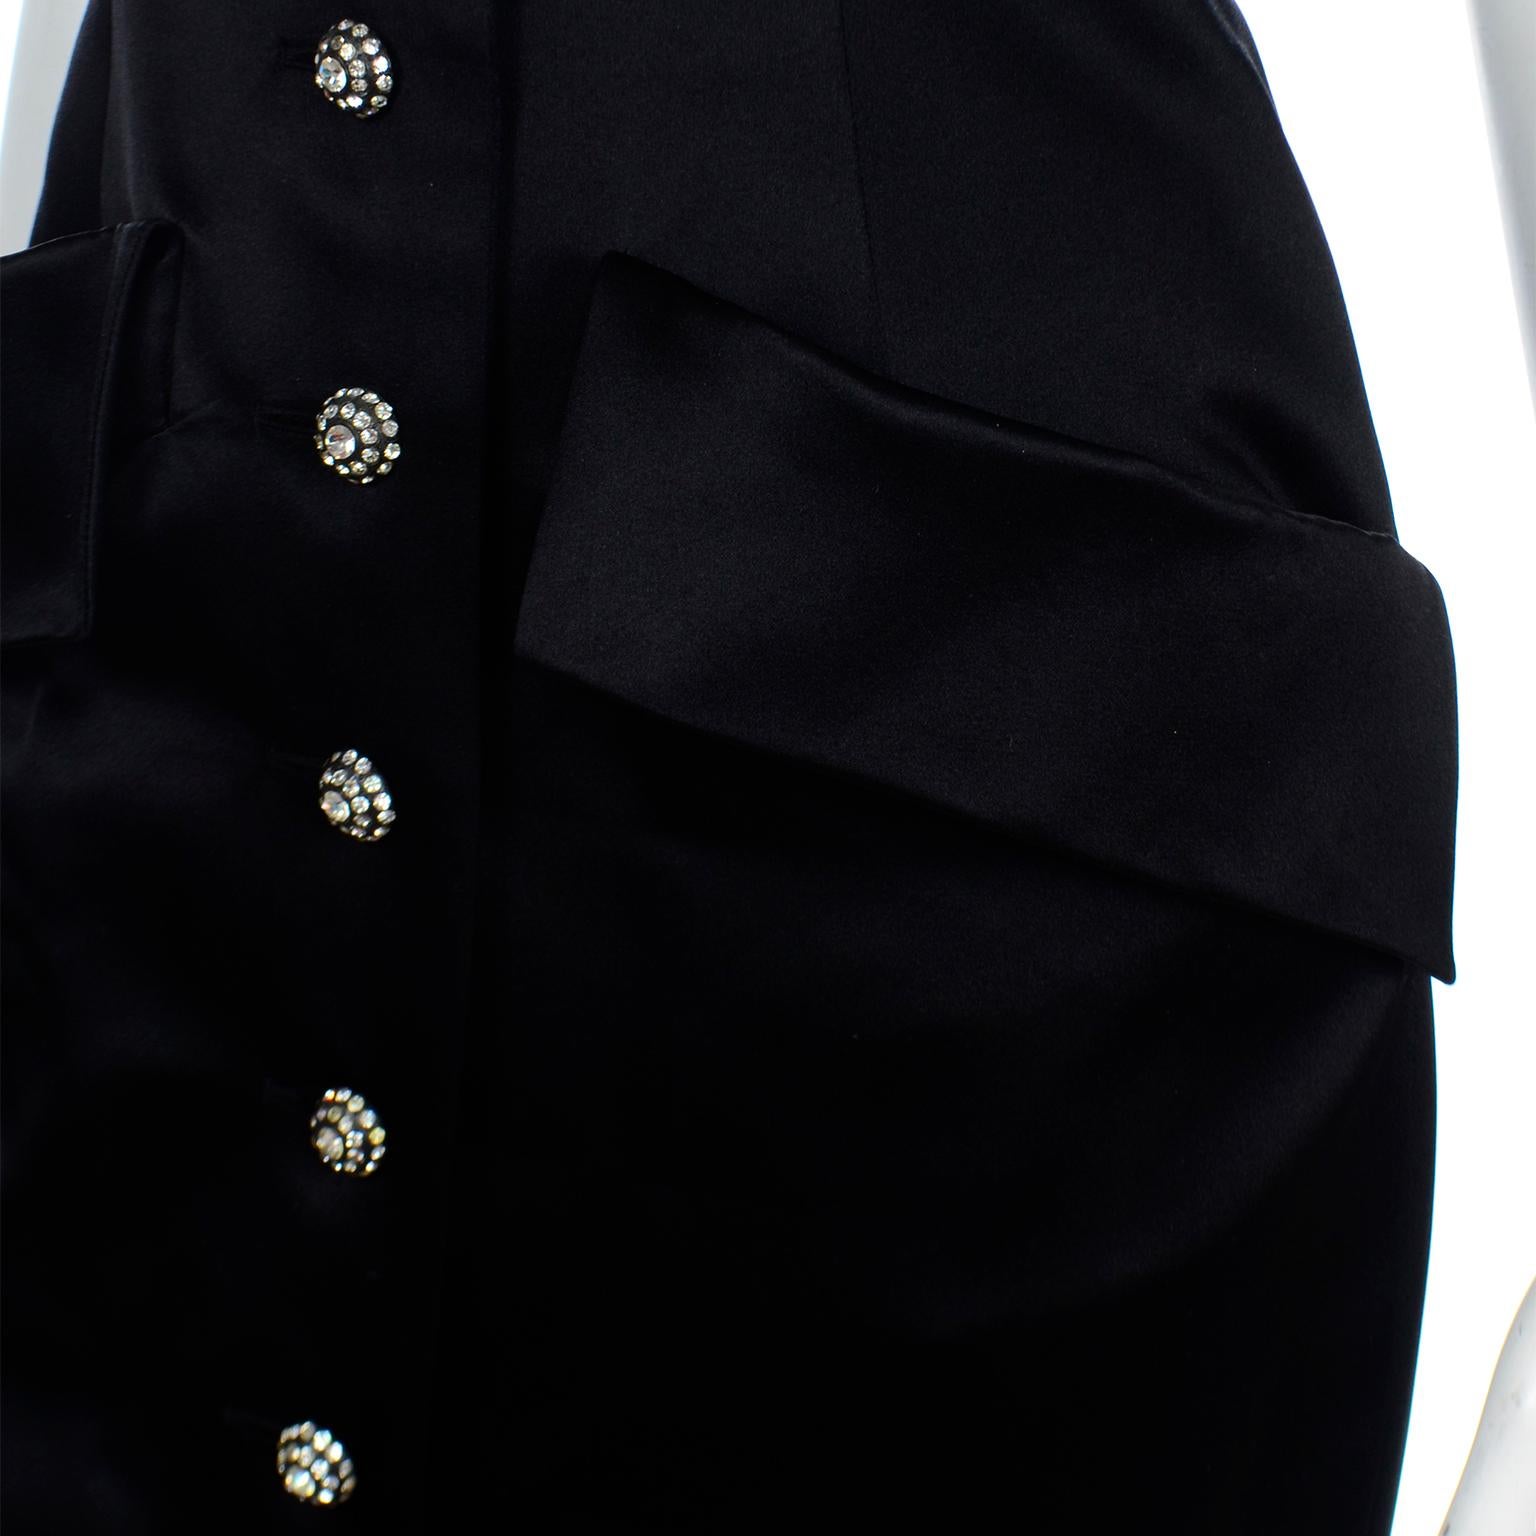 Yves Saint Laurent 1985 Vintage Black Strapless Runway Evening Gown For Sale 4